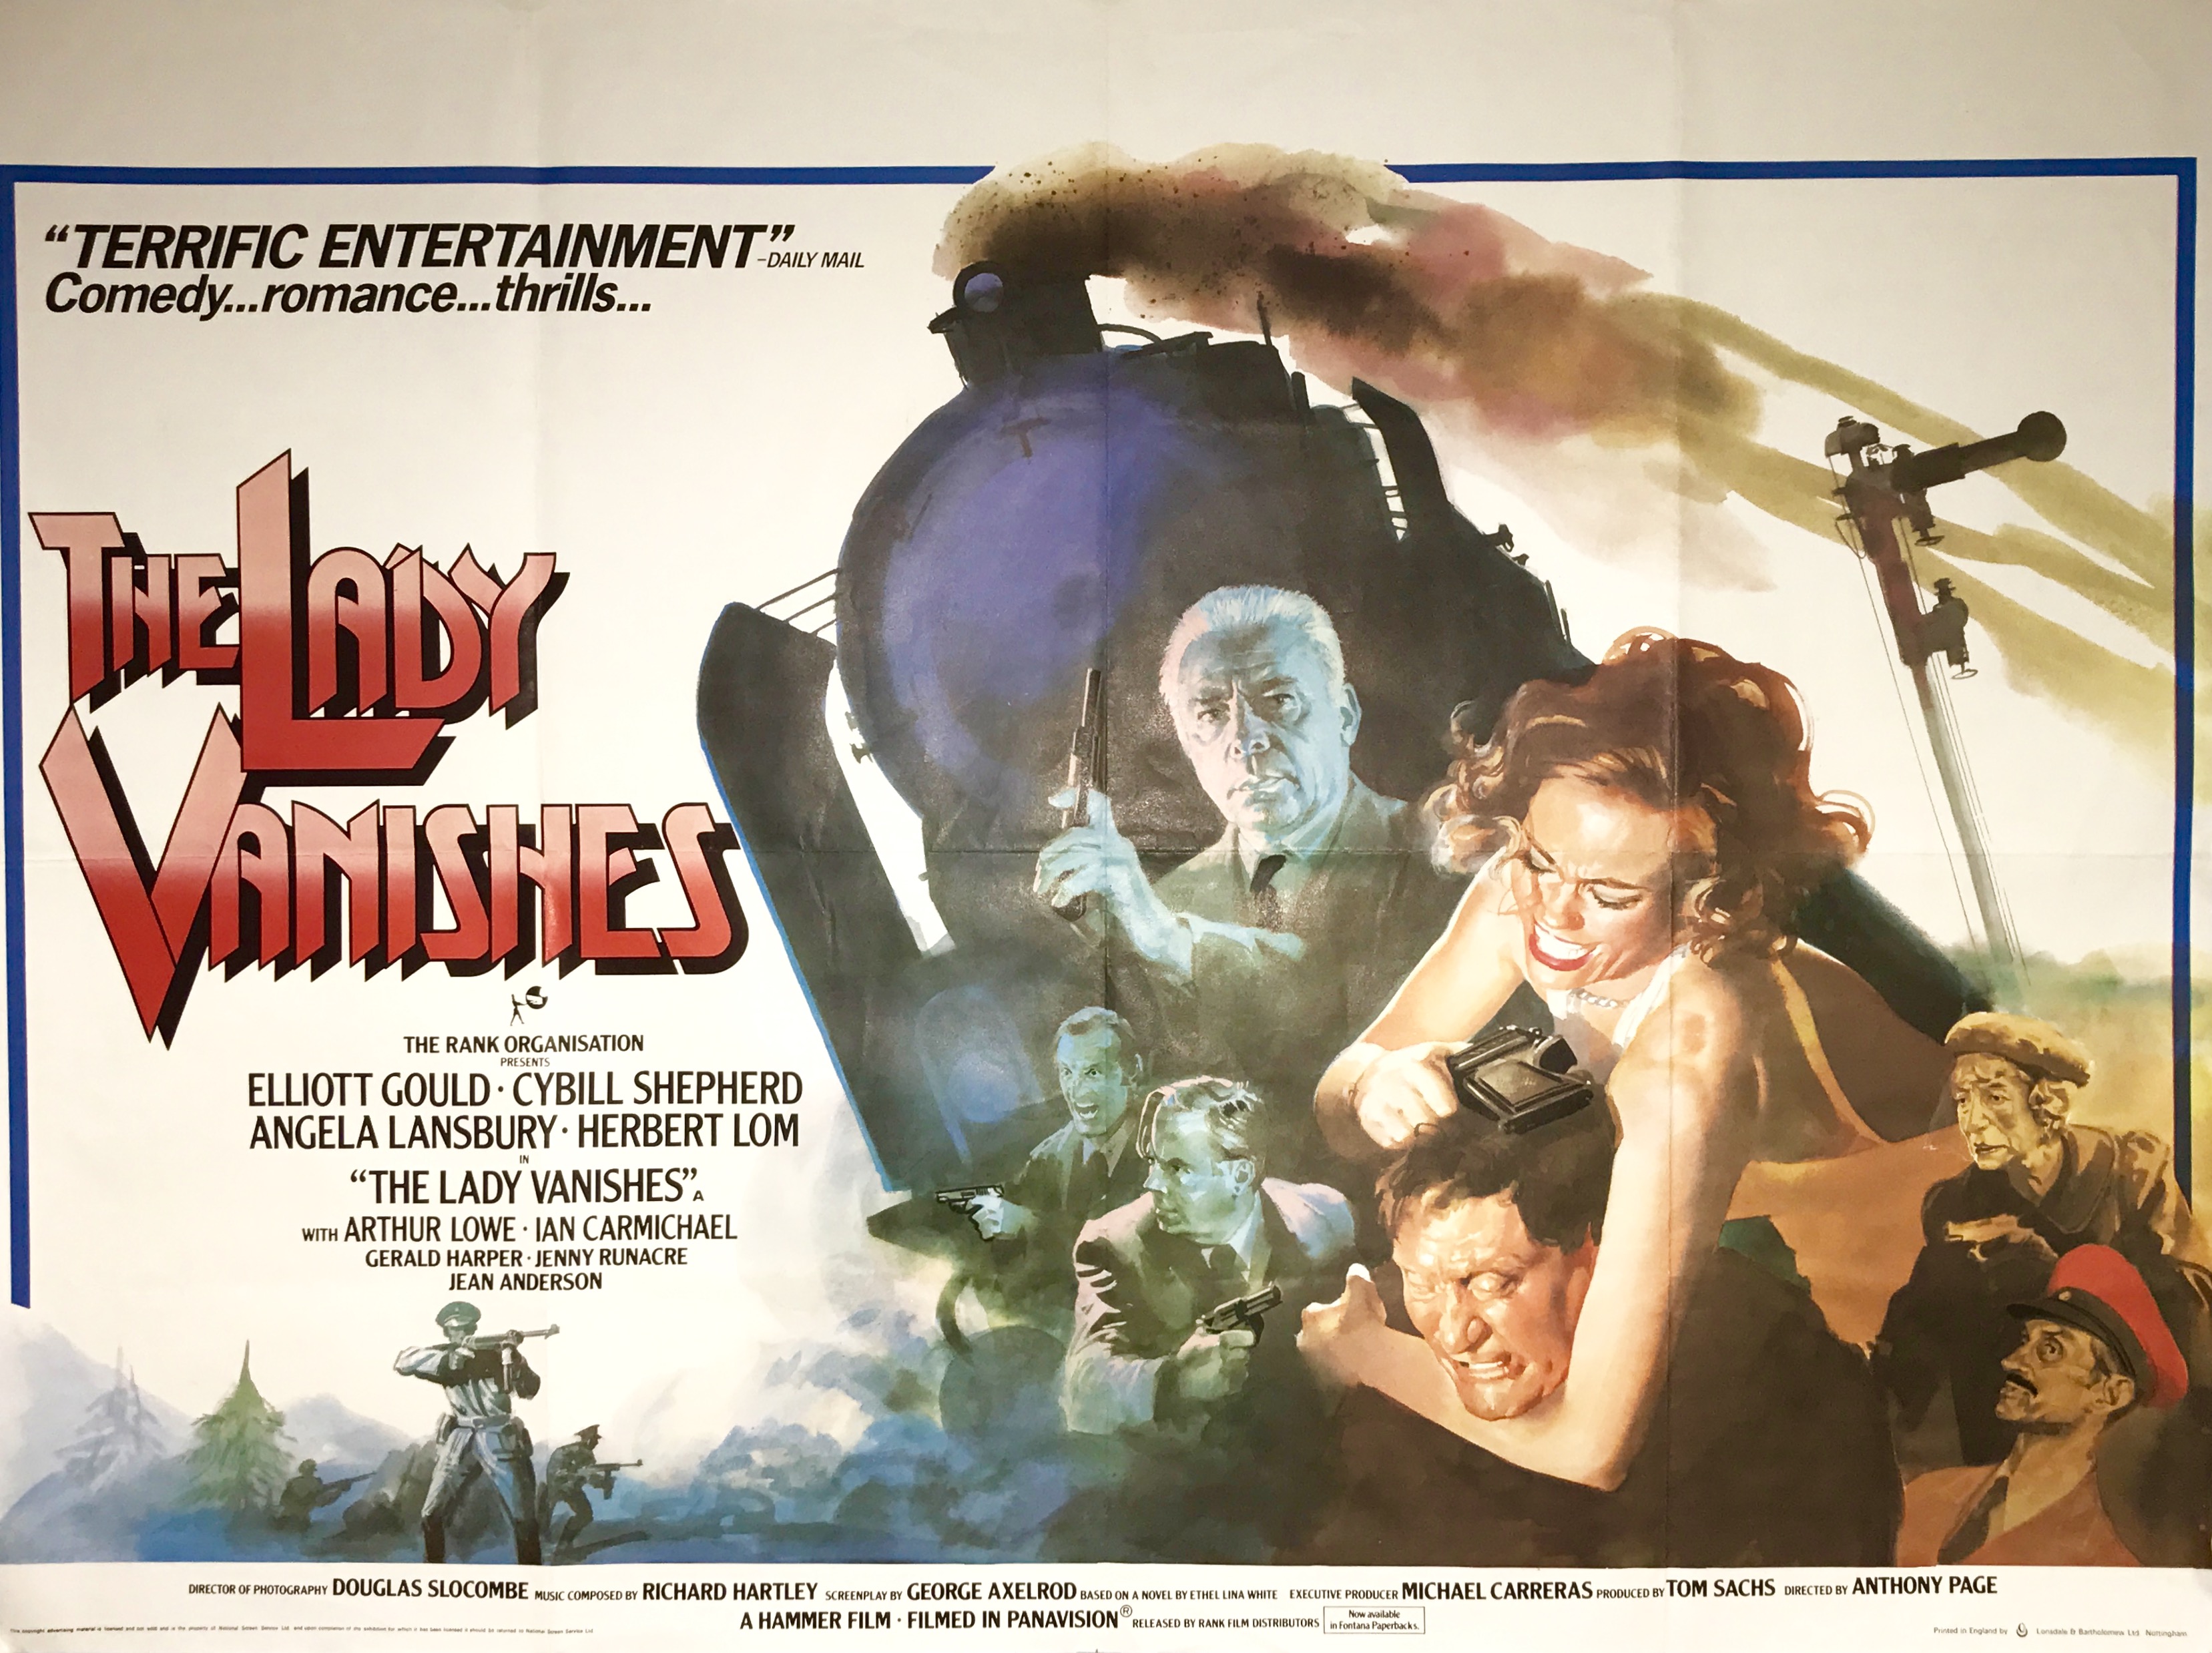 The Lady Vanishes (1979) UK style B quad poster